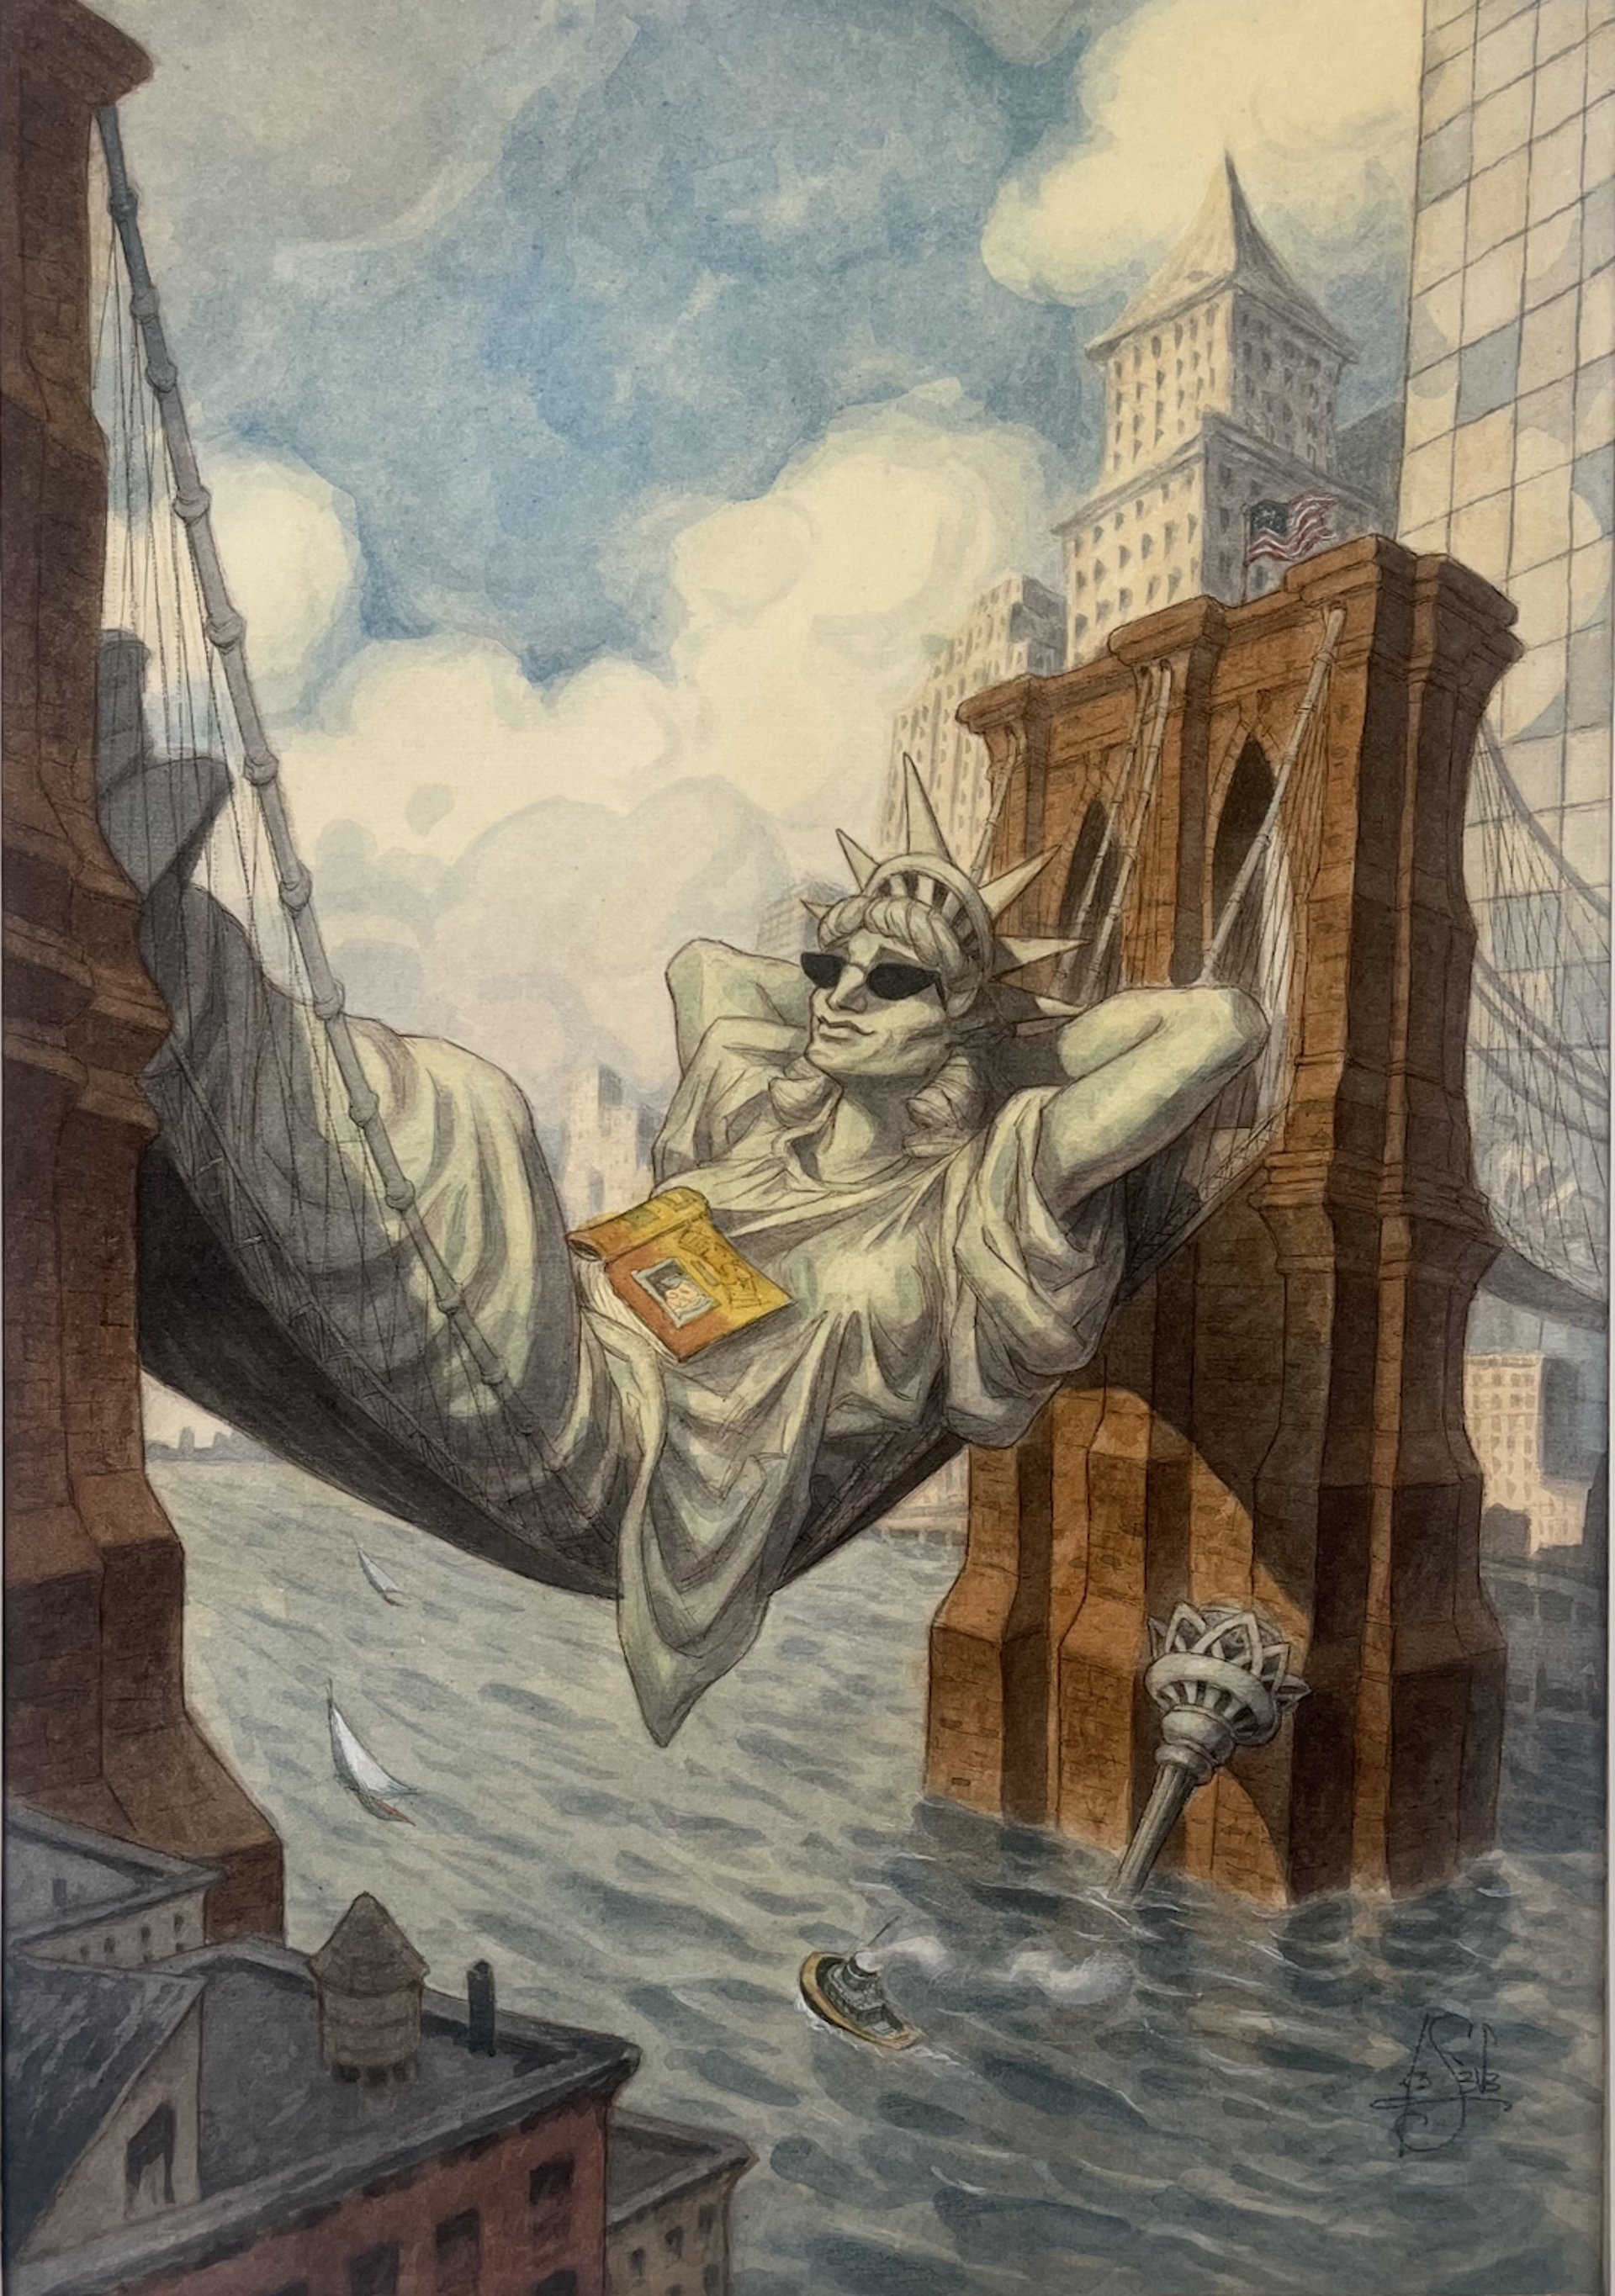 New Yorker cover "Liberty" by Peter de Sève